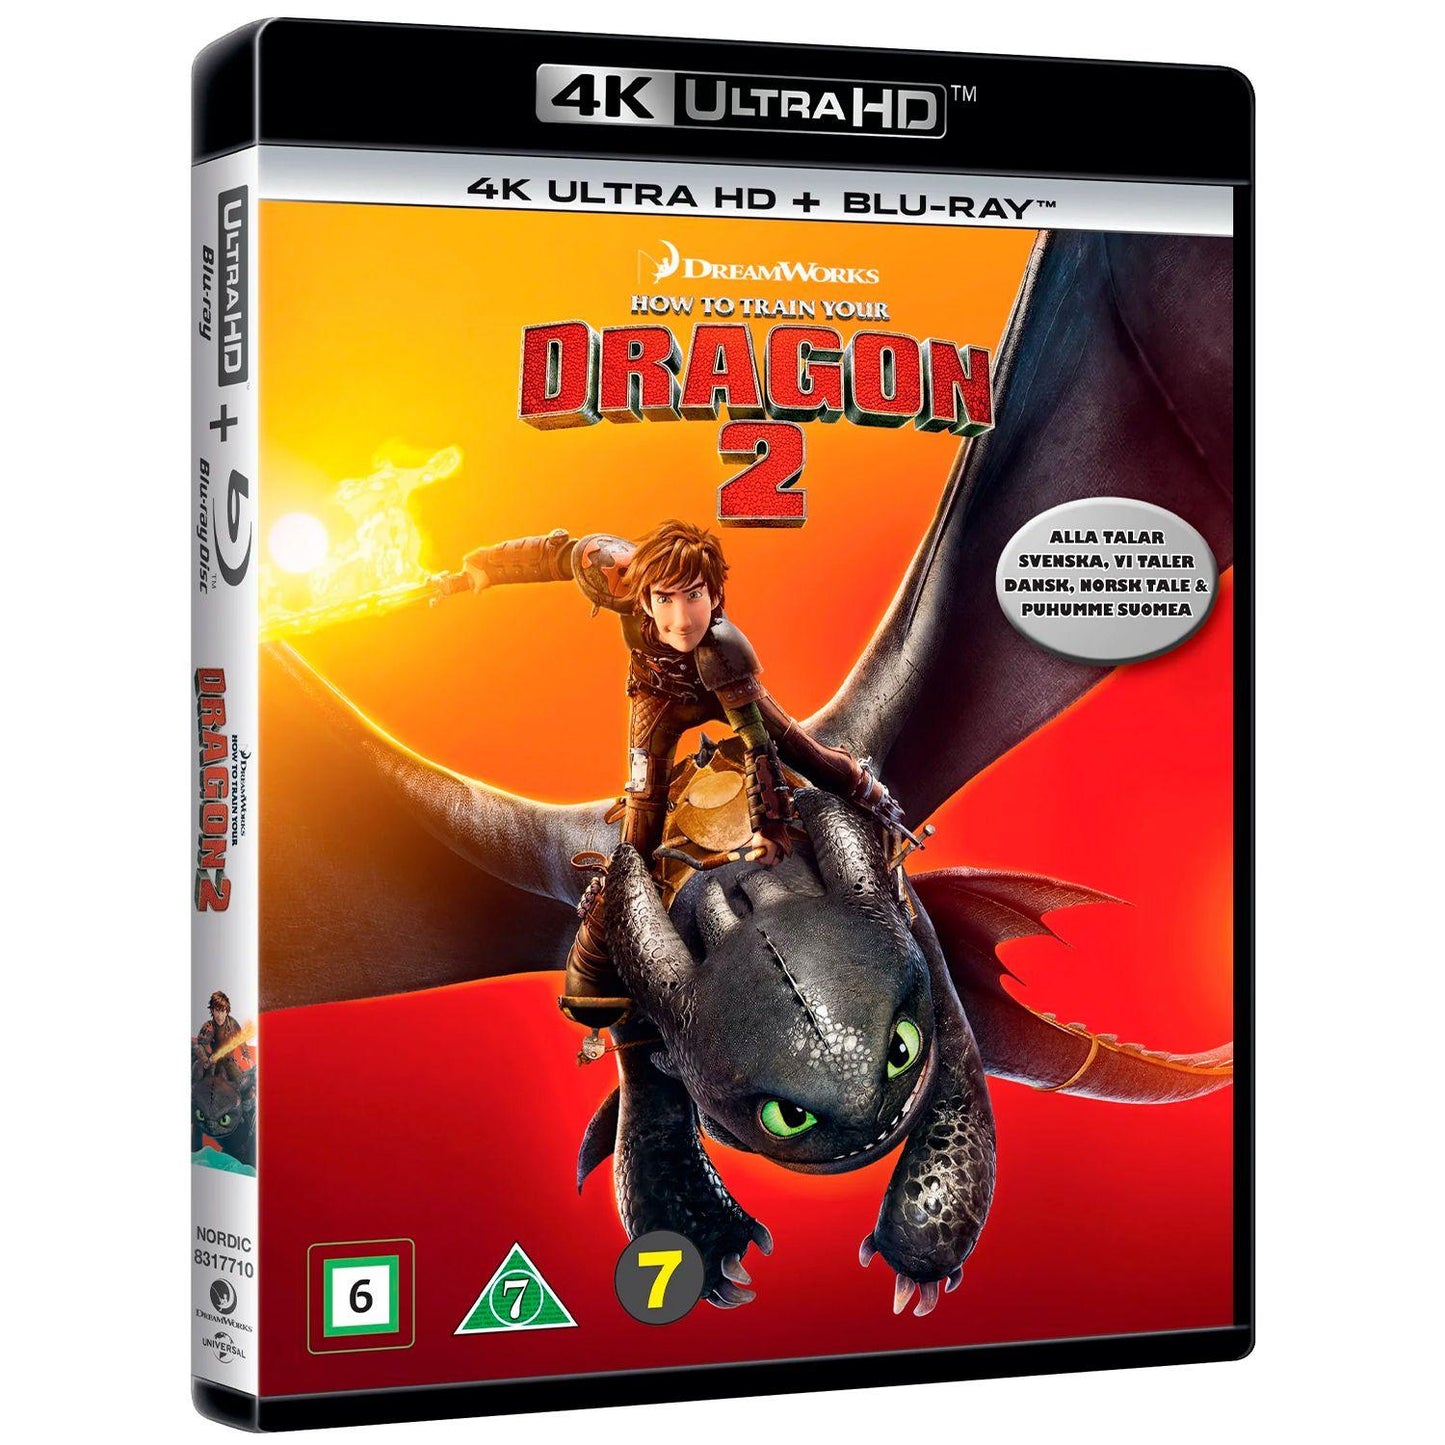 Как приручить дракона 2 (4K UHD + Blu-ray)